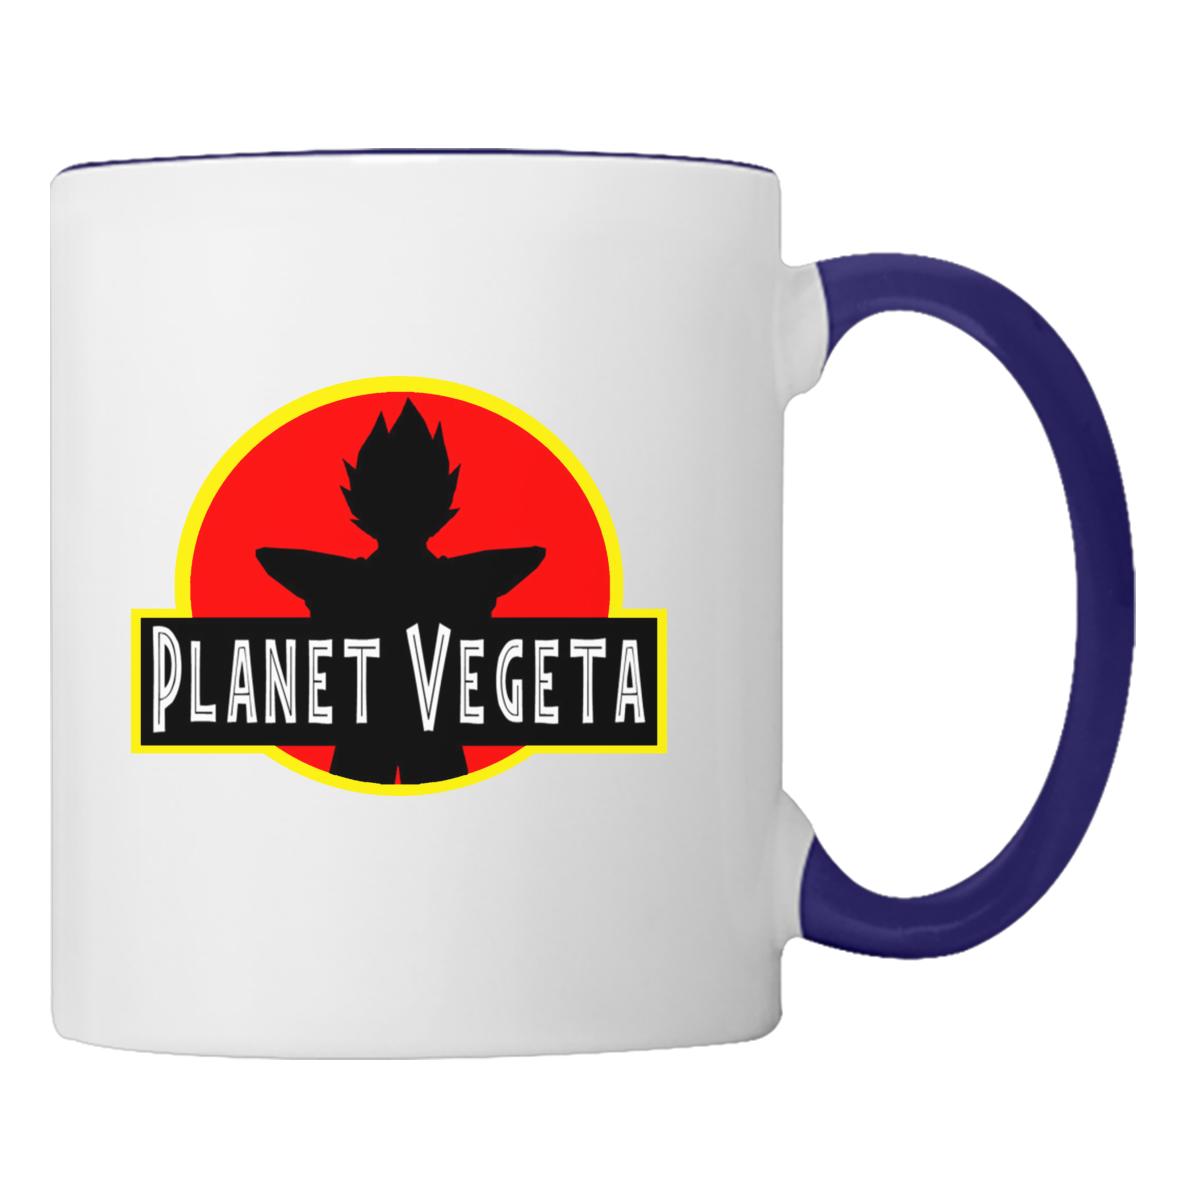 Vegeta Logo - Saiyan Royale planet vegeta logo Coffee Mug | Customon.com